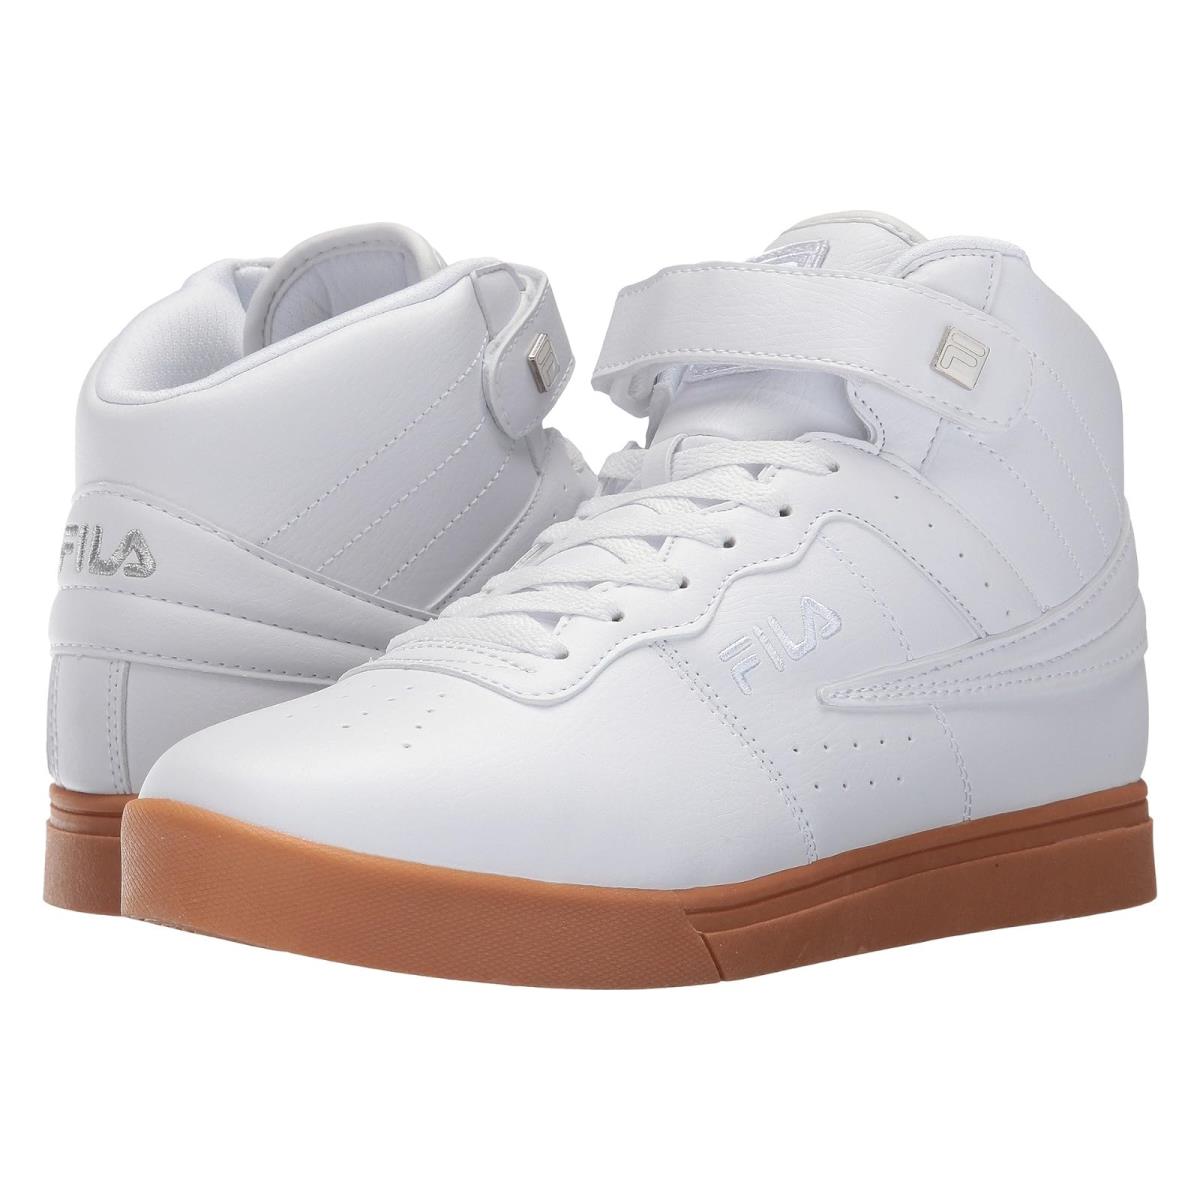 Man`s Sneakers Athletic Shoes Fila Vulc 13 Mid Plus White/Metallic Silver/Gum